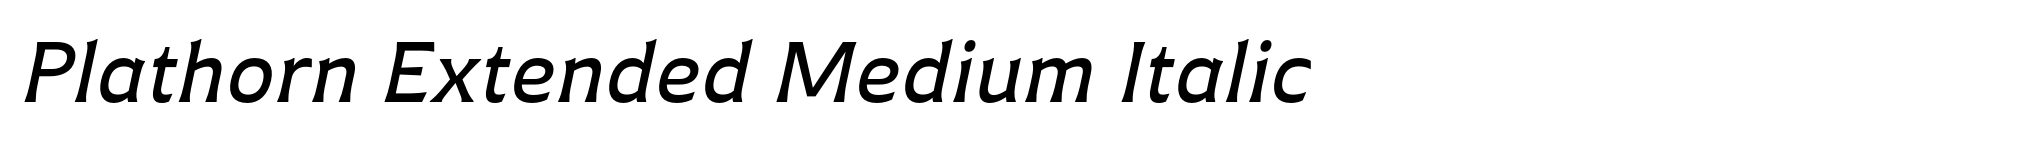 Plathorn Extended Medium Italic image